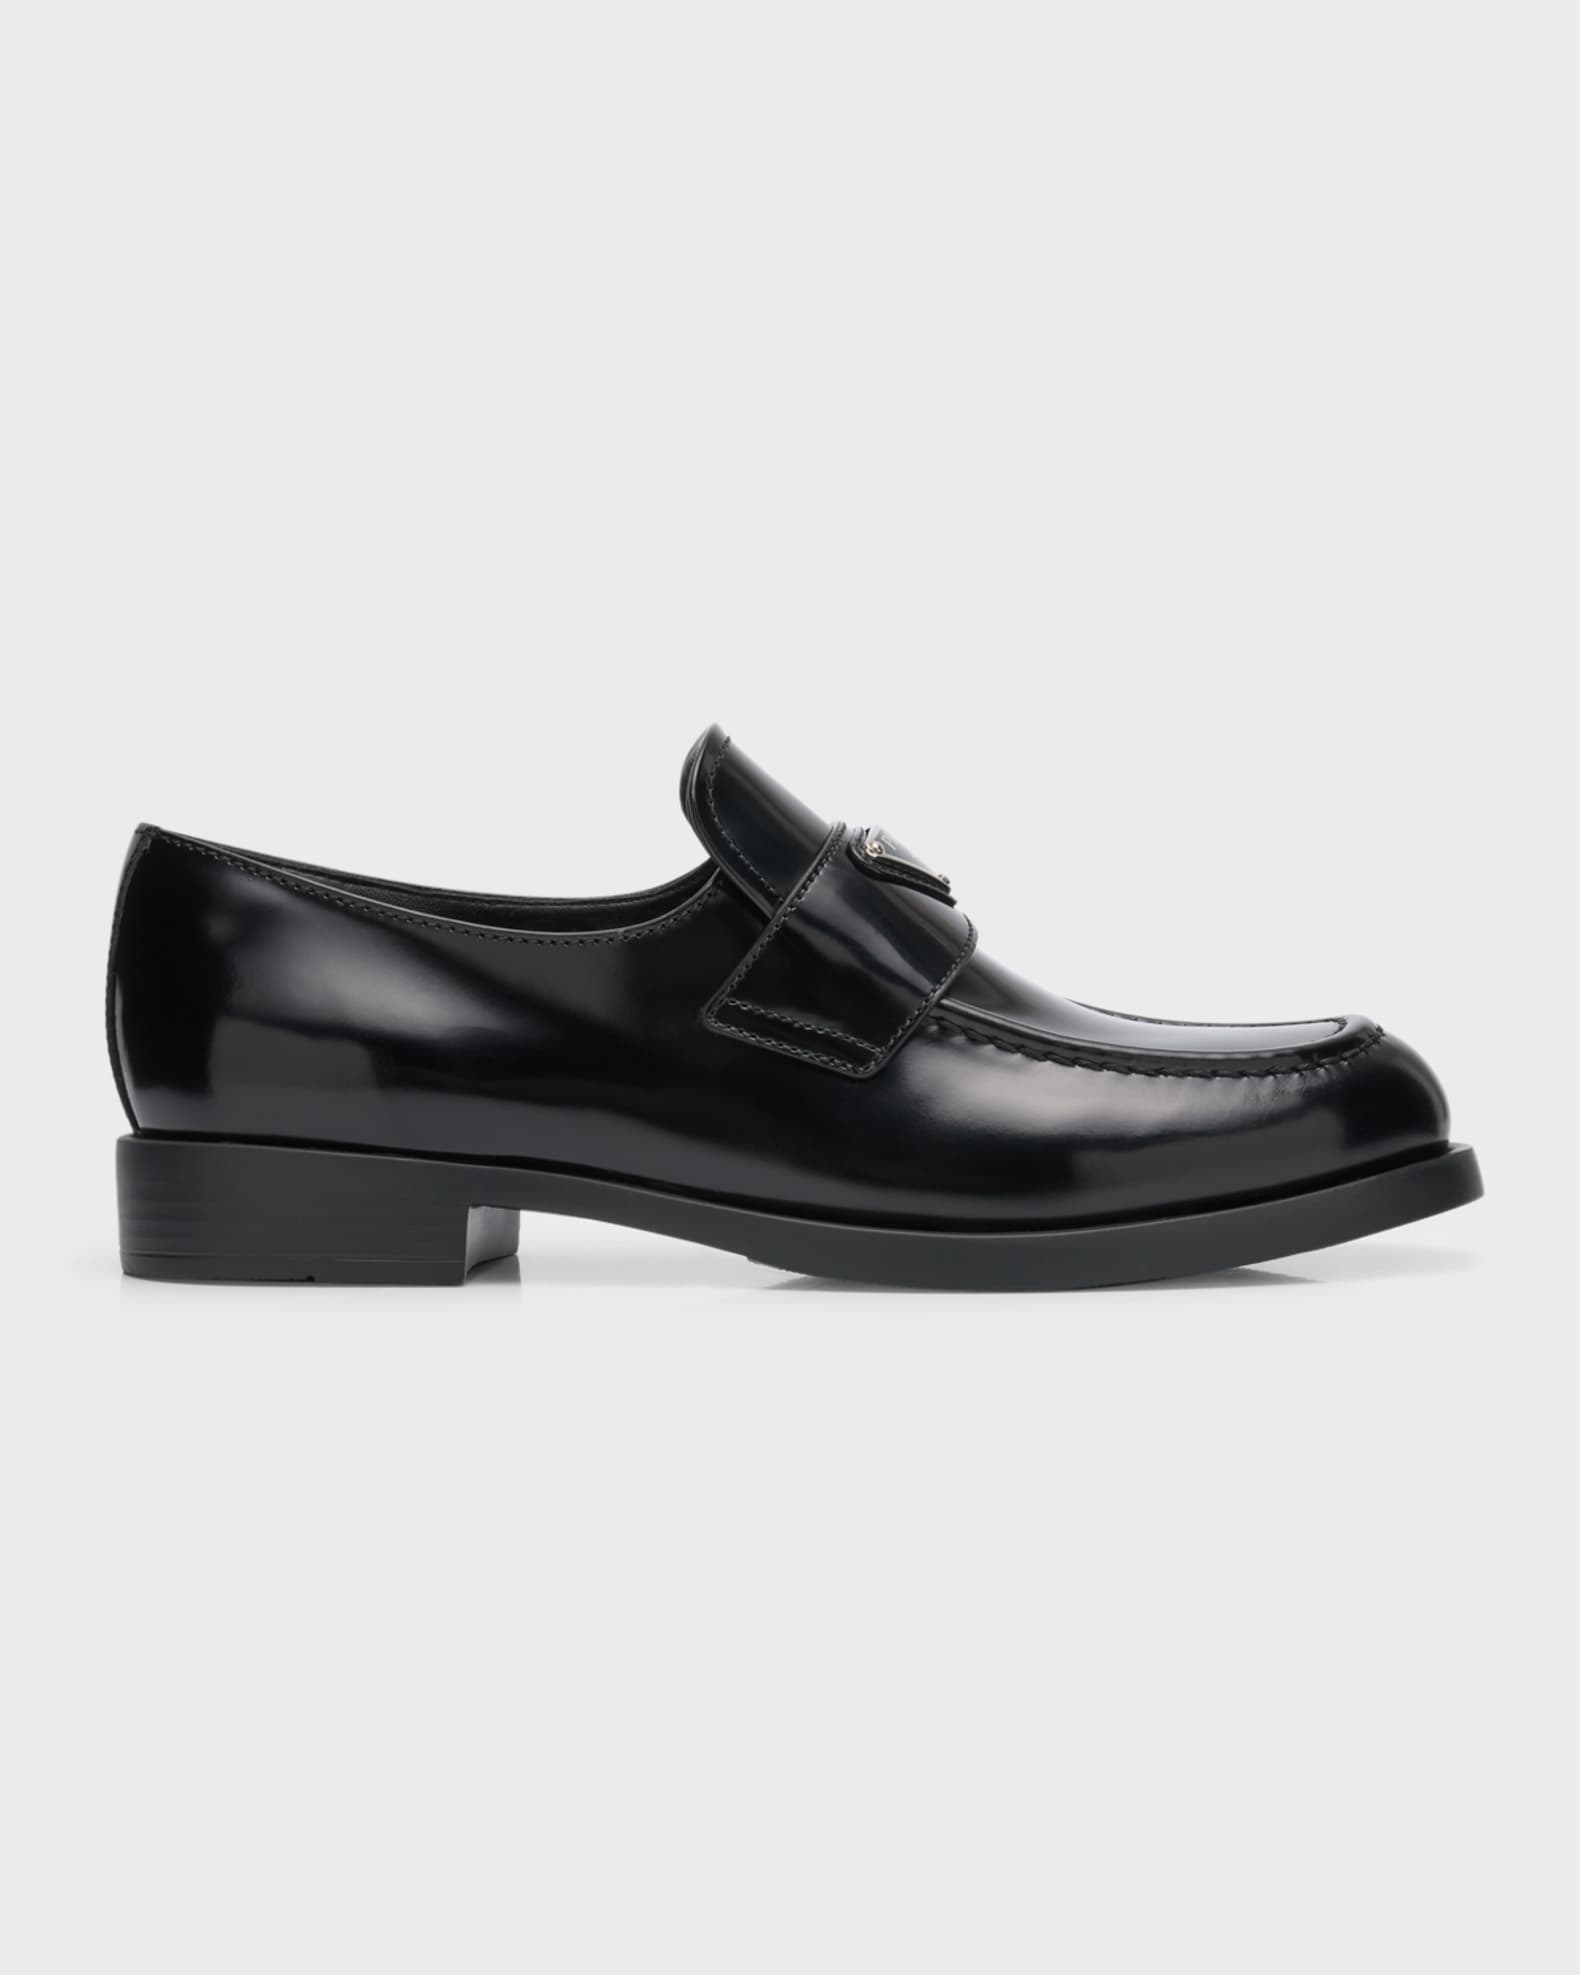 Prada Leather Slip-On Flat Loafers | Neiman Marcus